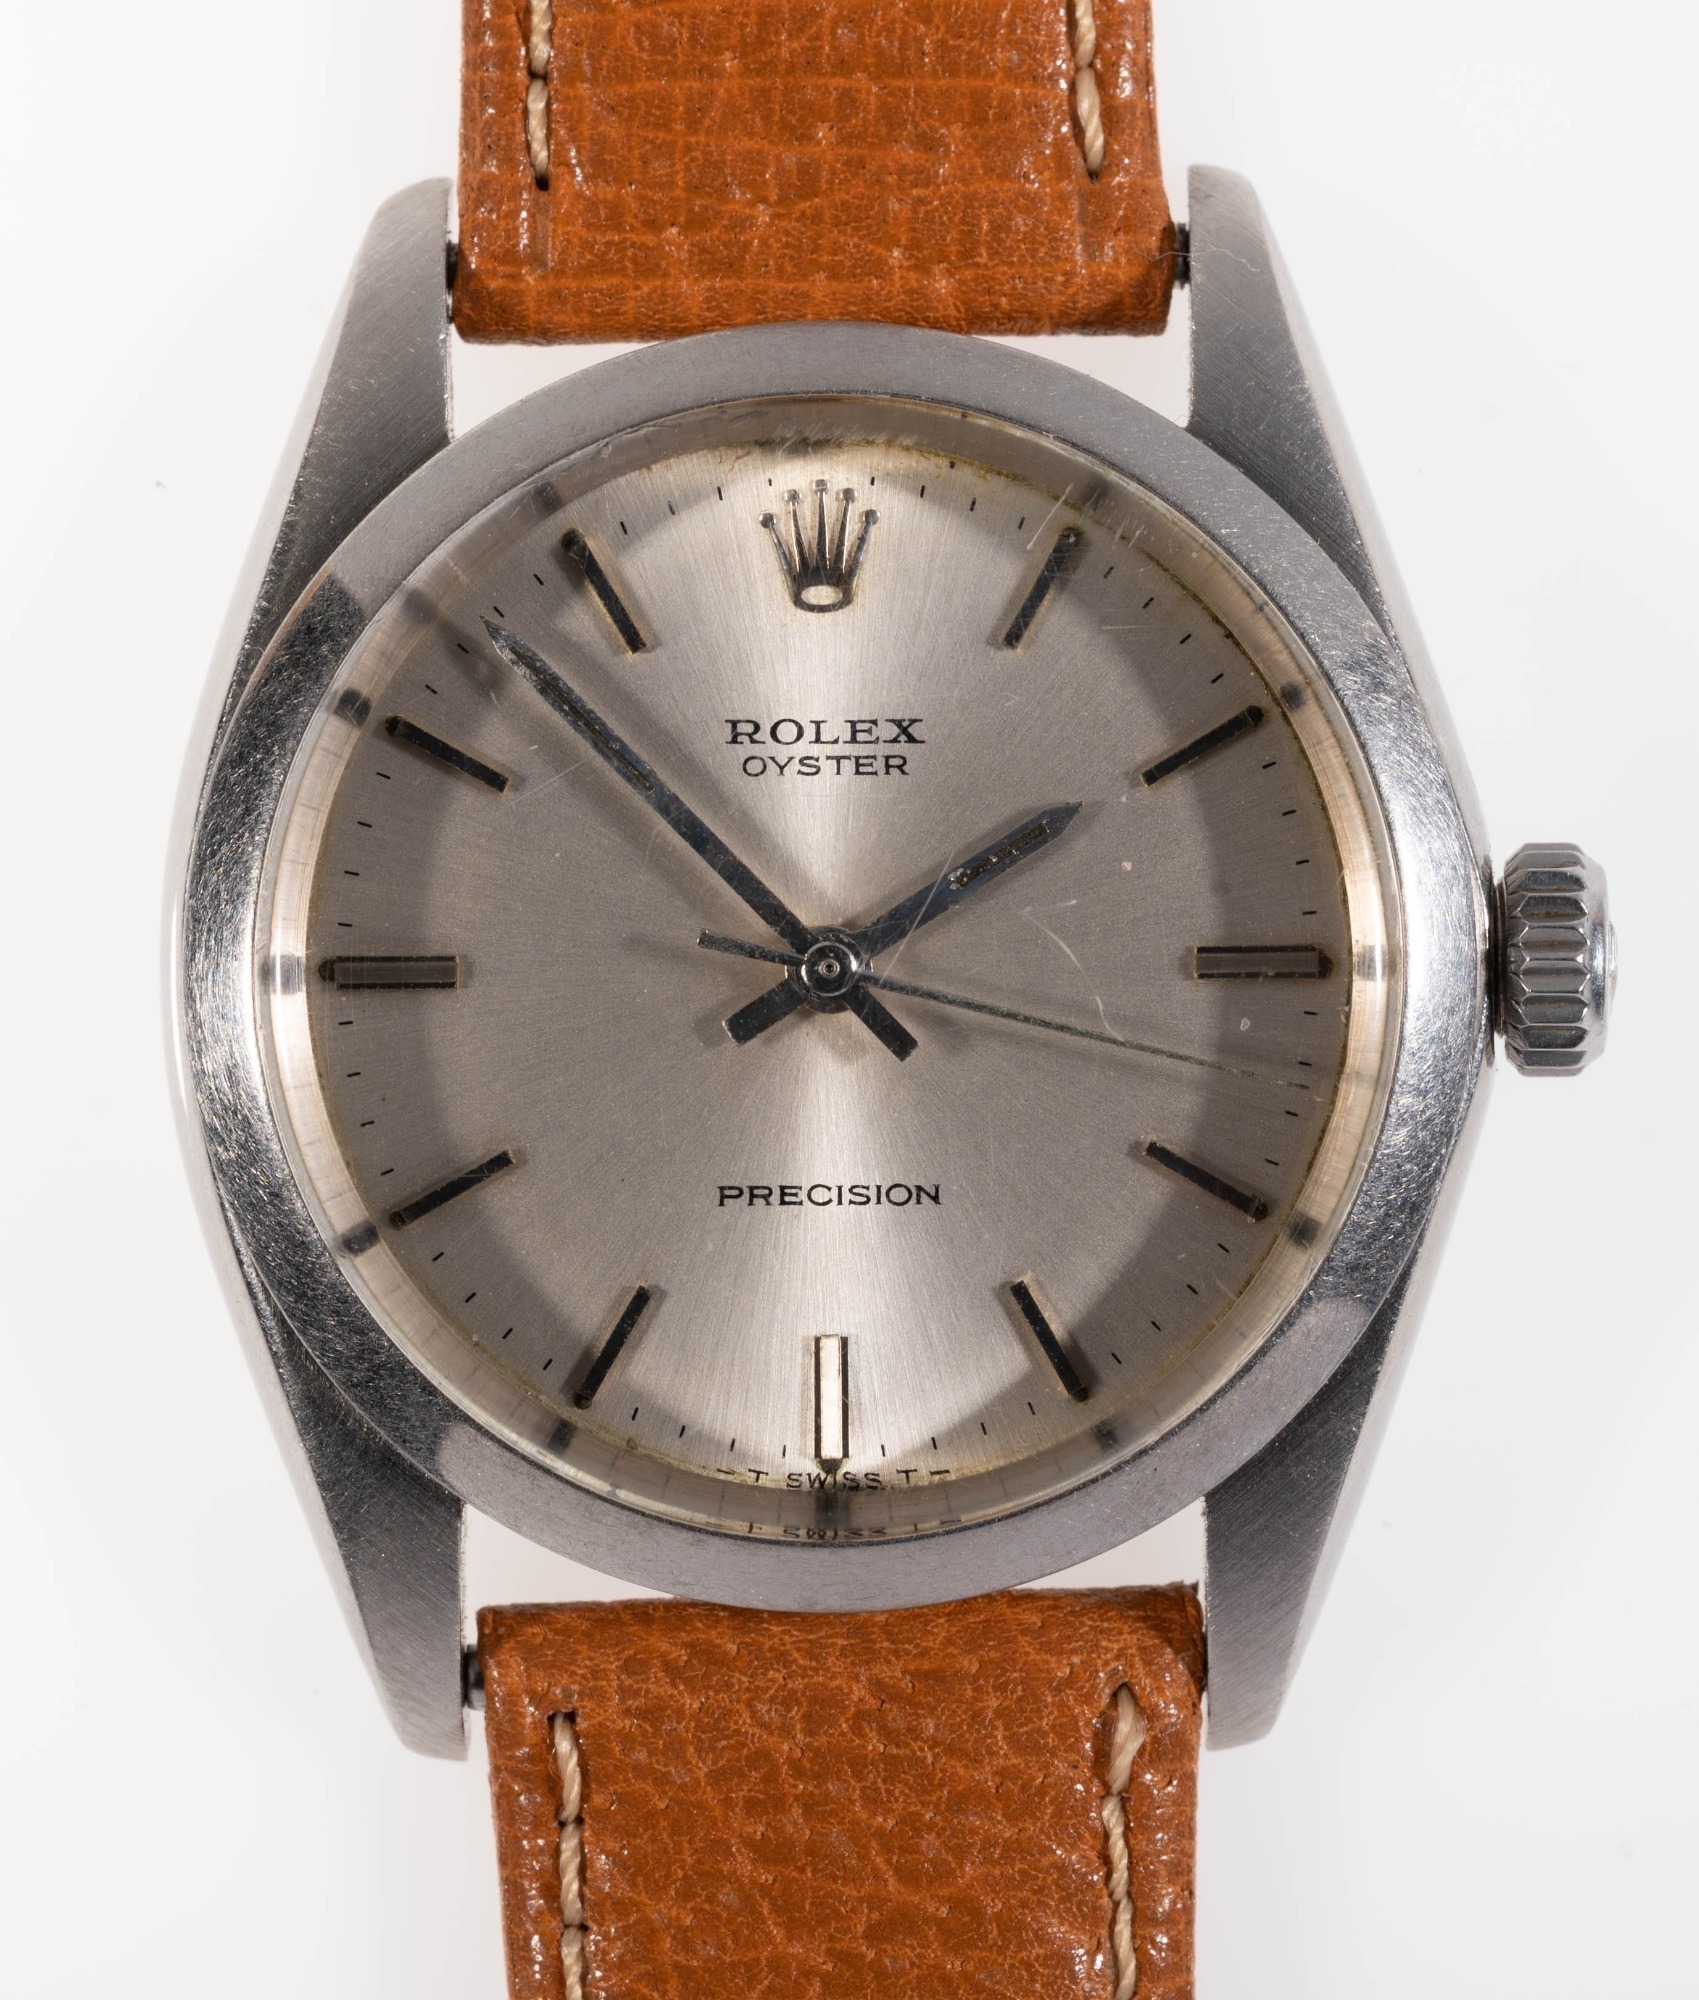 Rolex Oyster Precision Ref. 6426 Stainless Steel Wristwatch